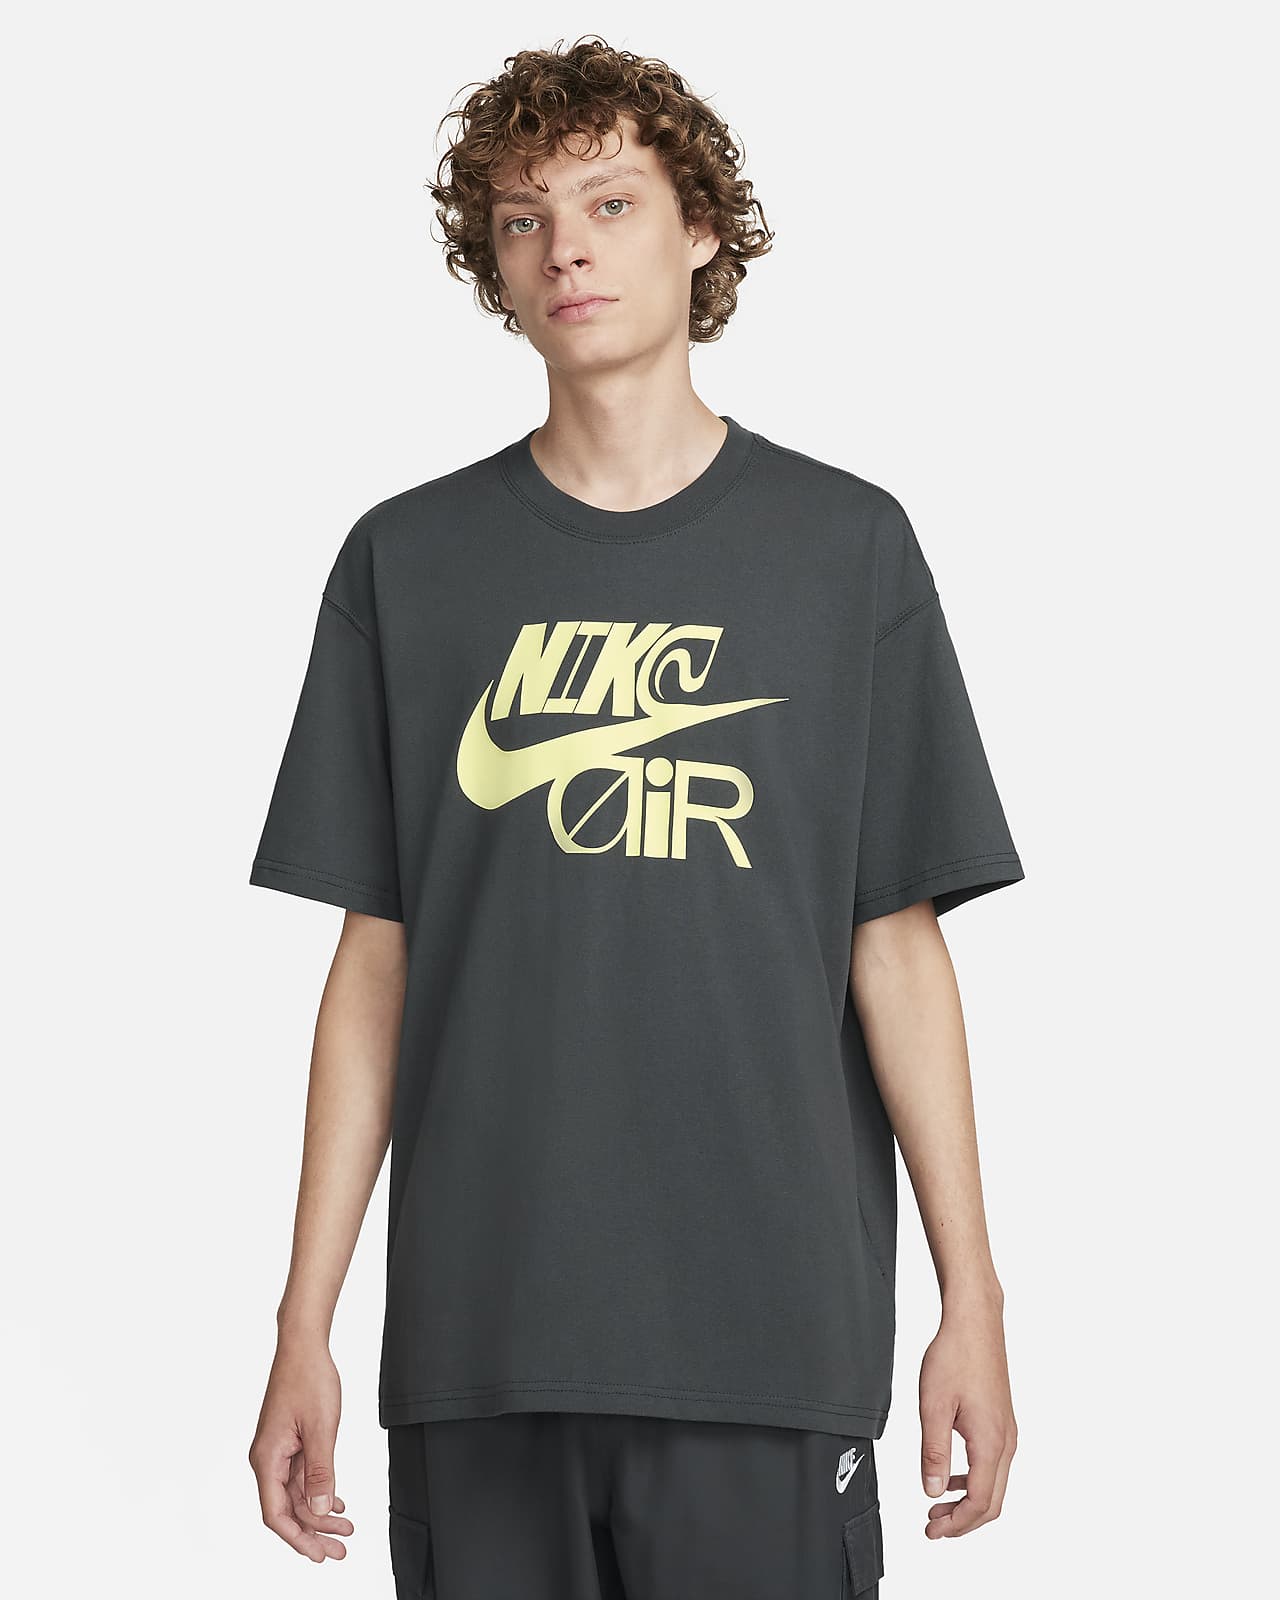 Nike Sportswear Men's Max90 T-Shirt. Nike LU